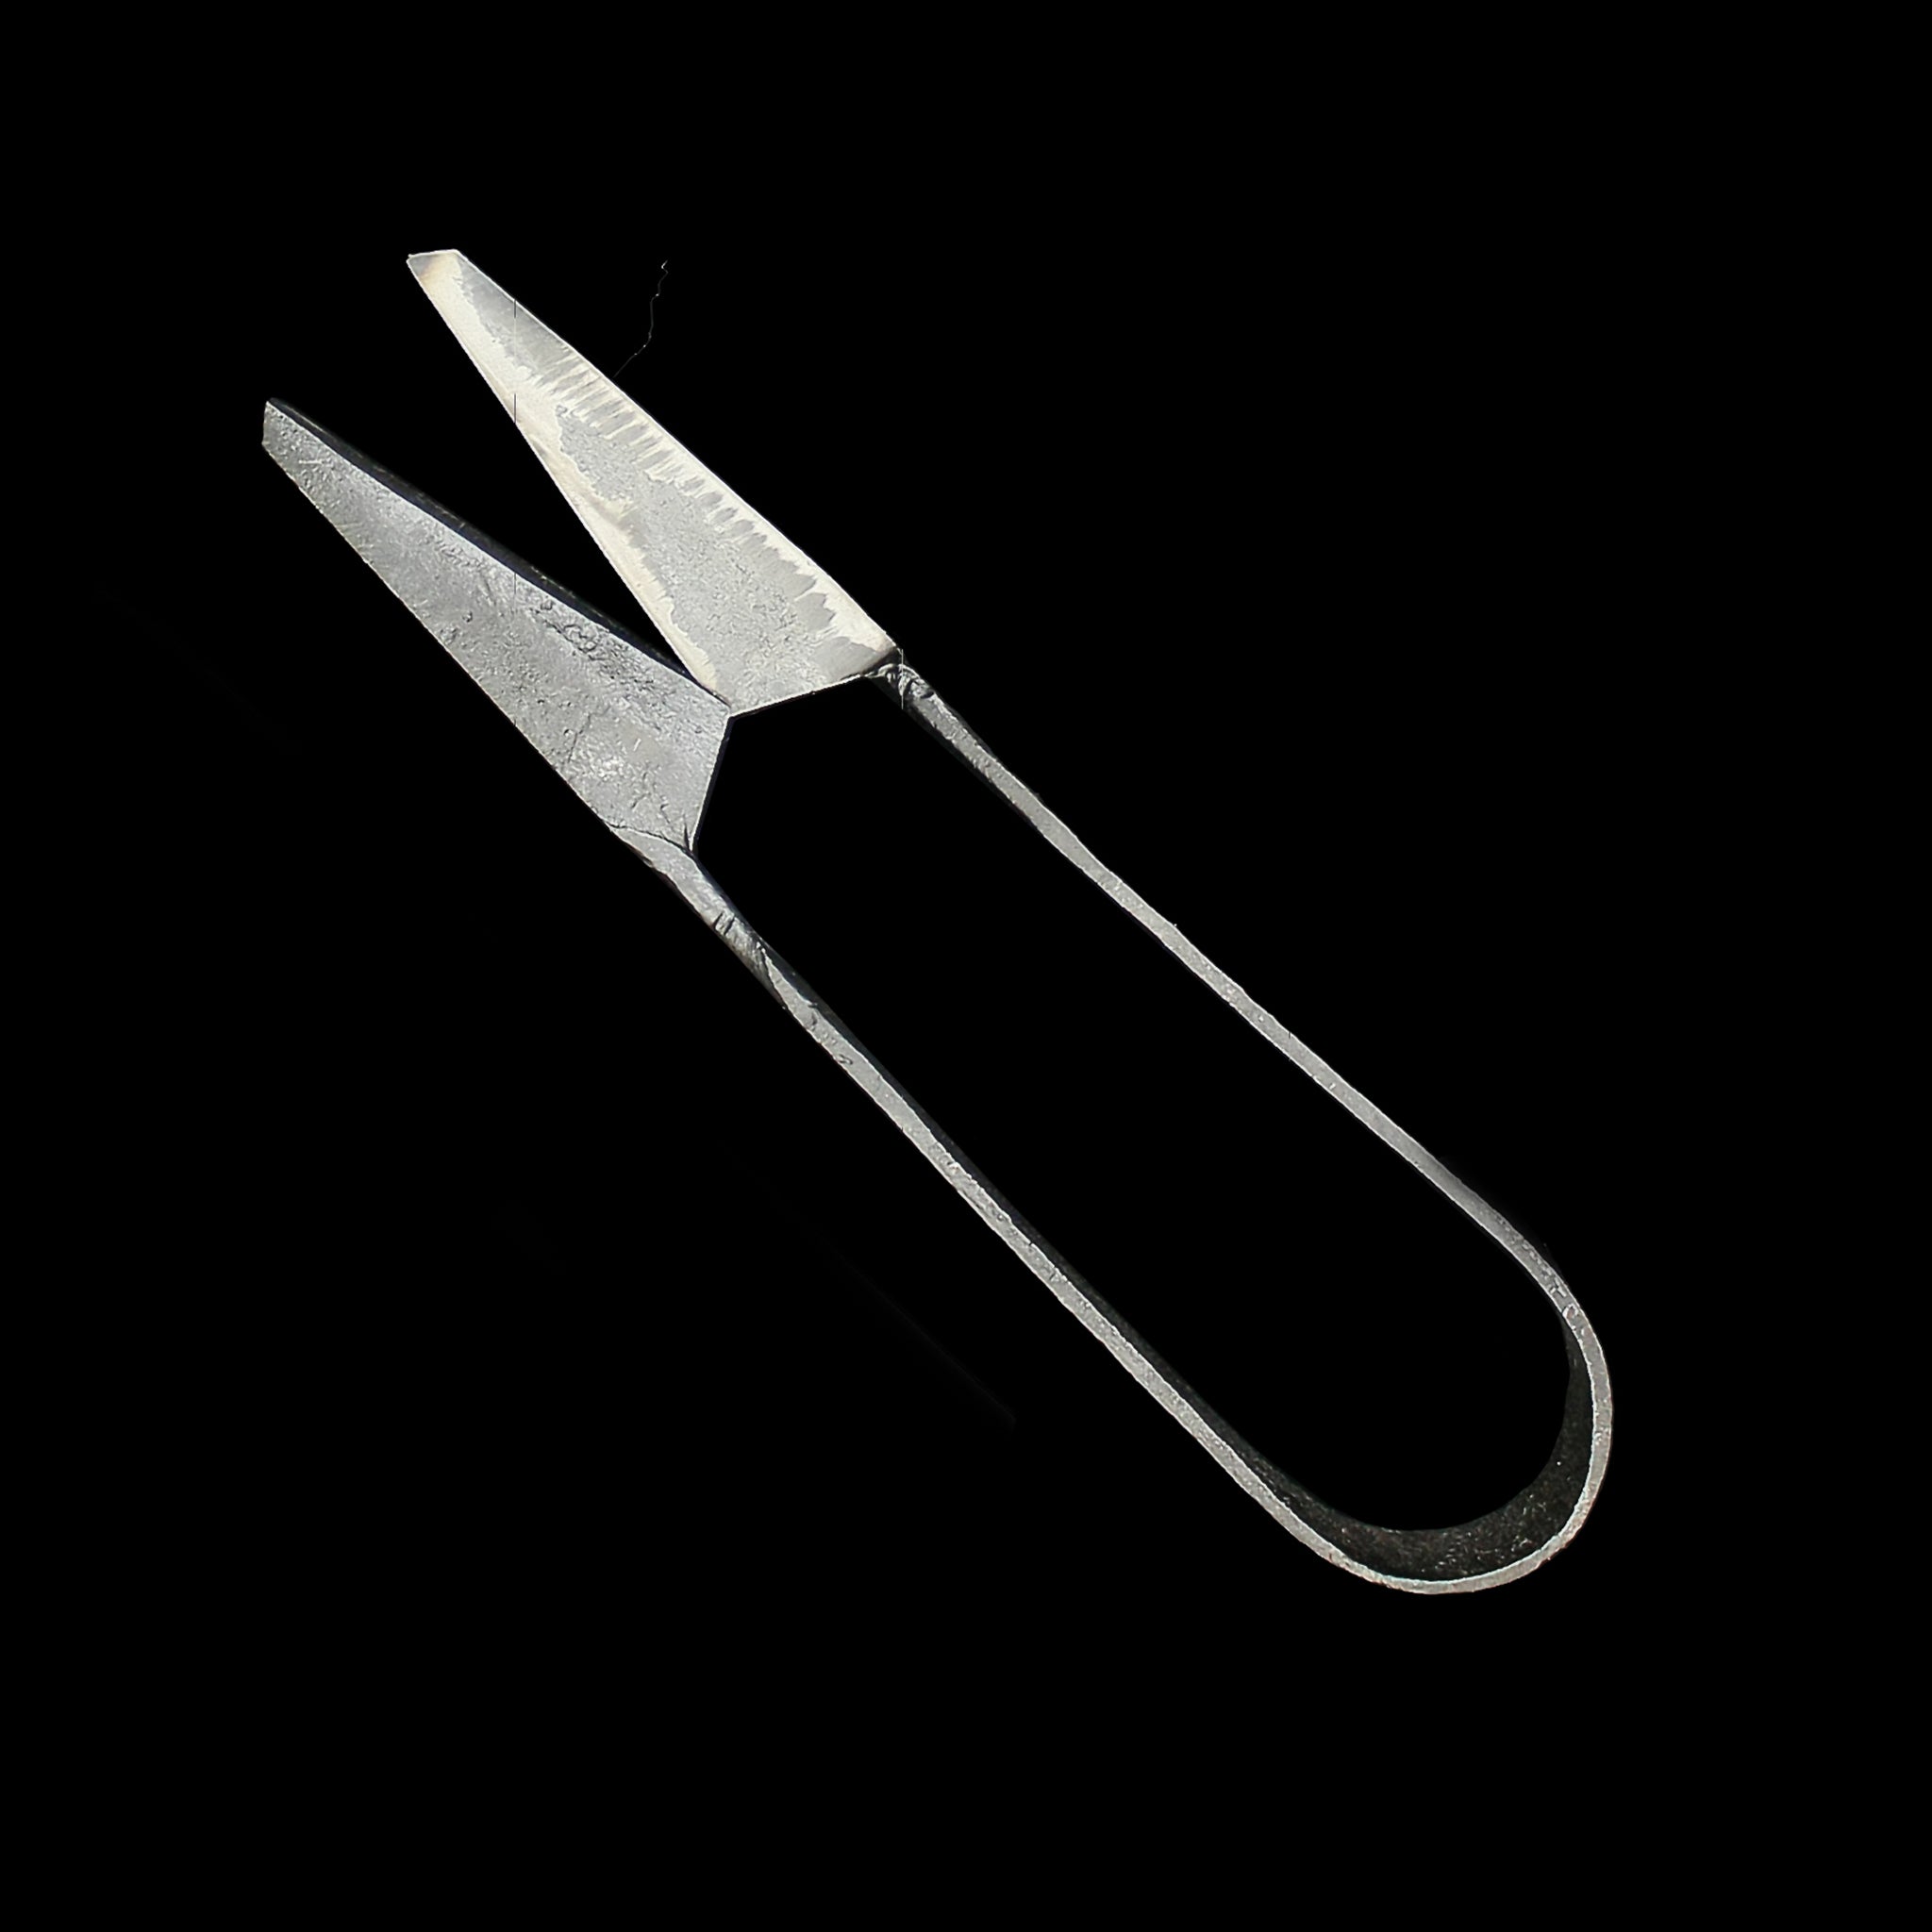 Hand-Forged Medium Snips Scissors Shears